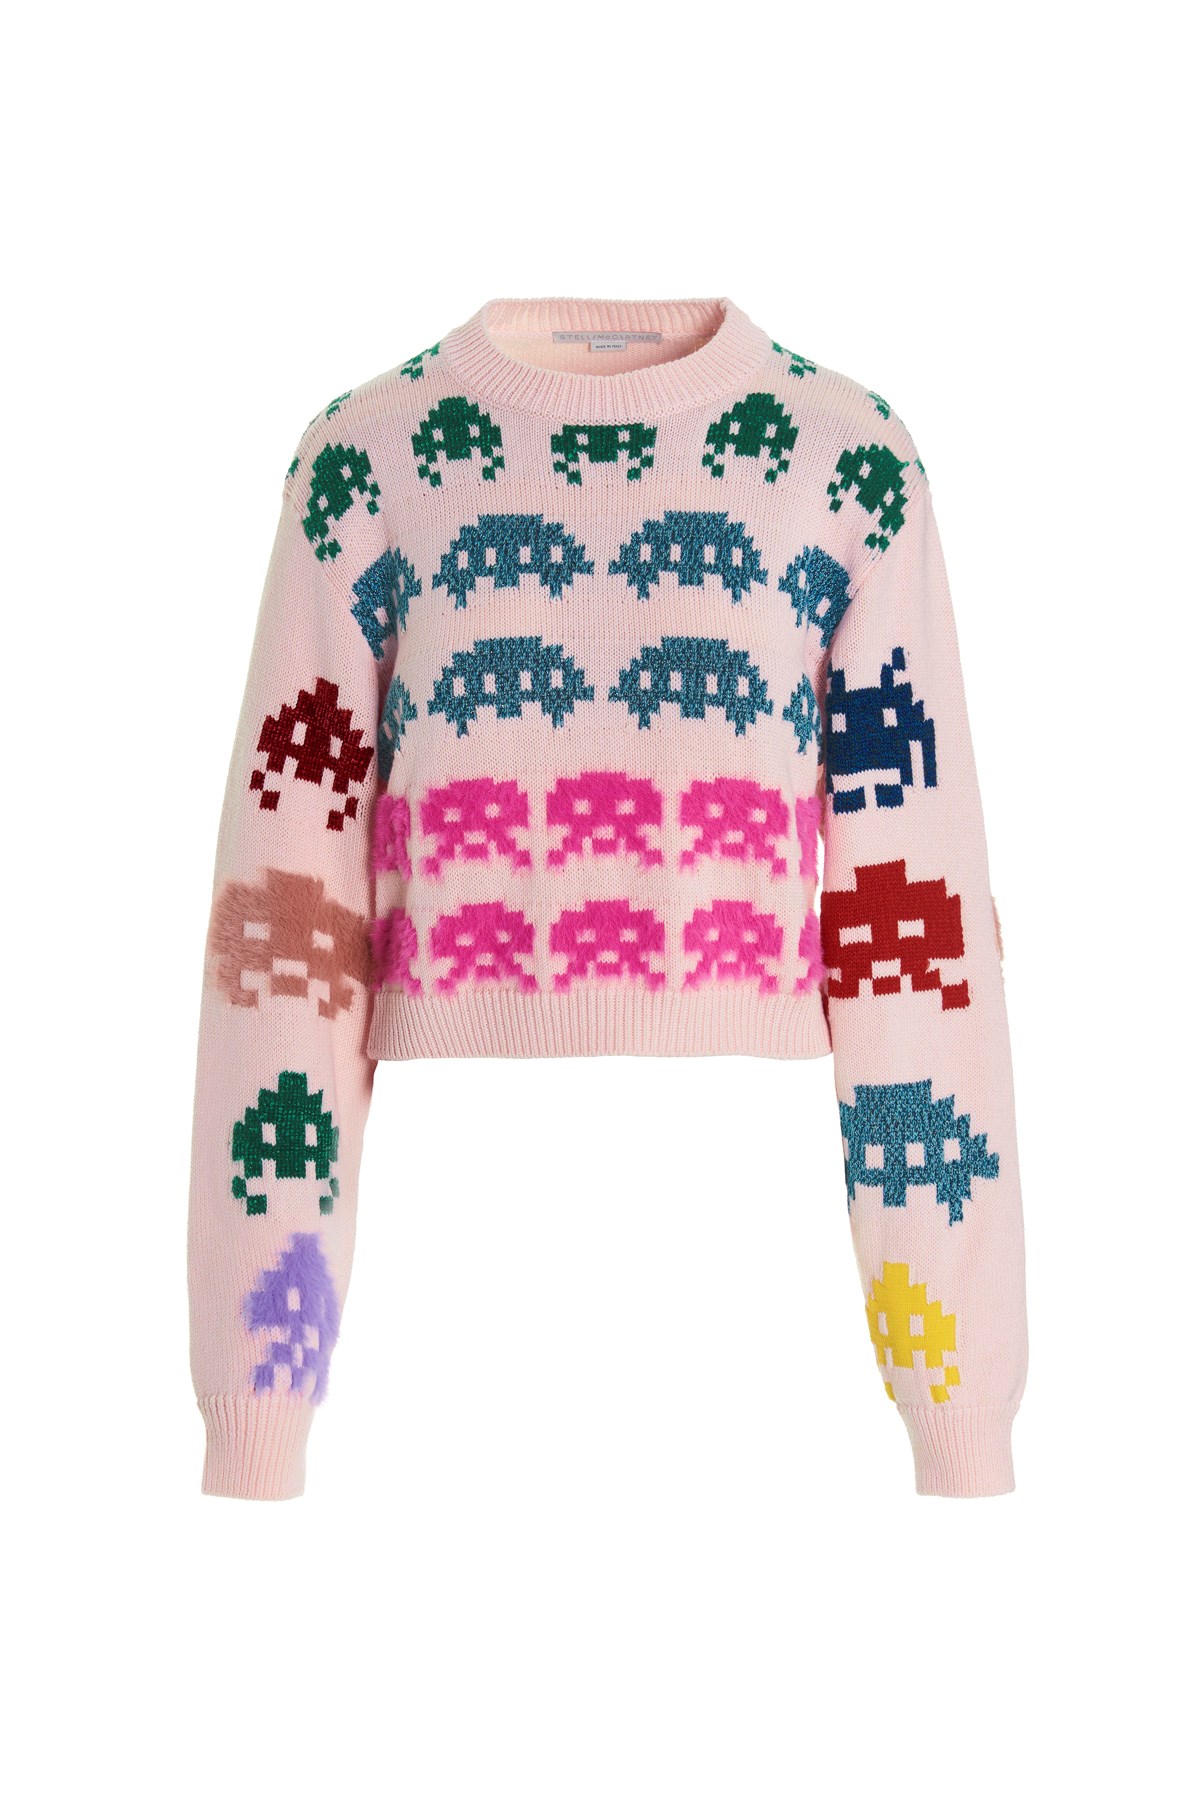 STELLA MCCARTNEY ‘Game On’ Sweater